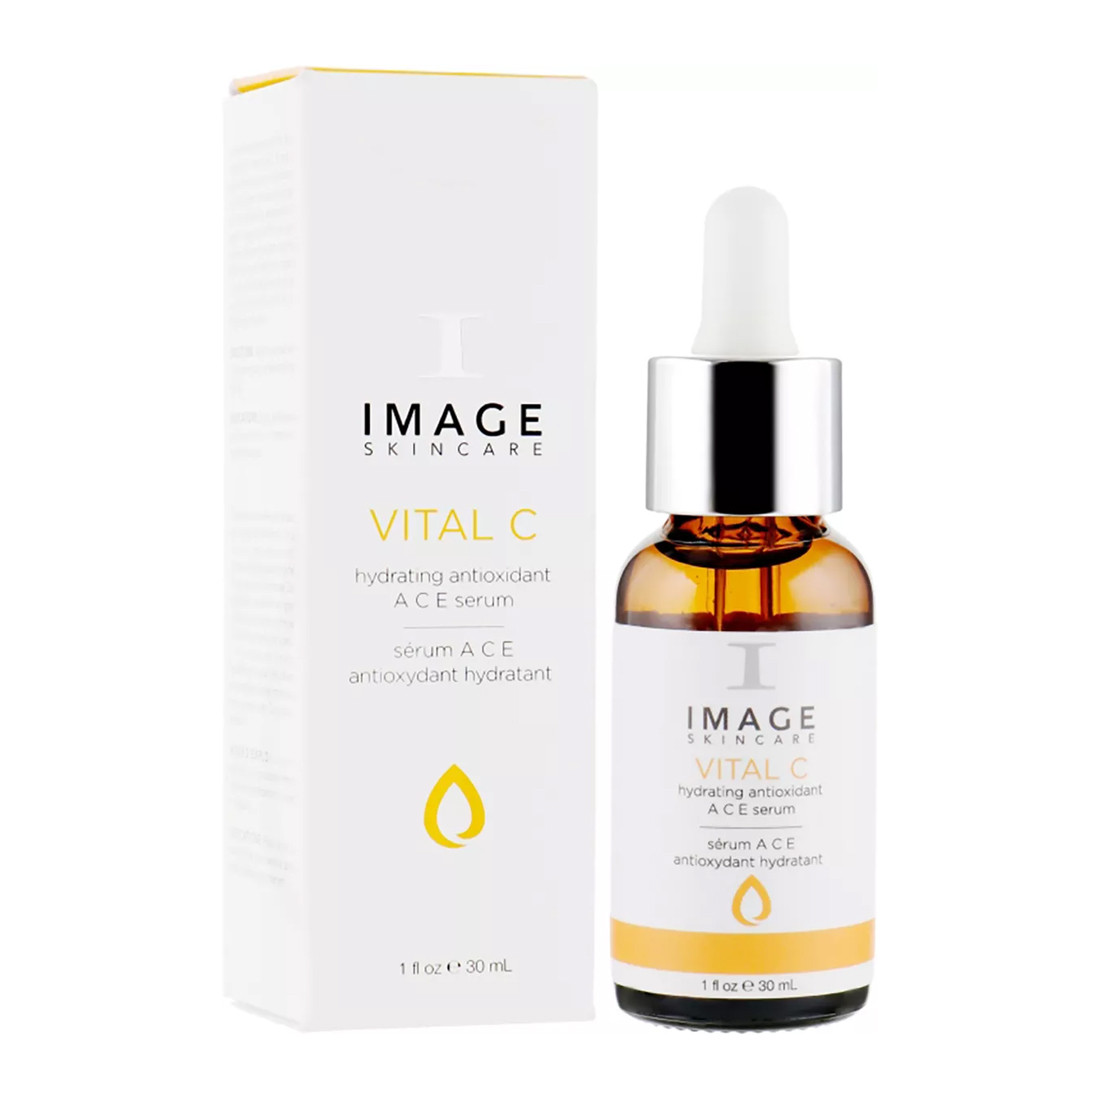 image skincare vital c hydrating ace serum